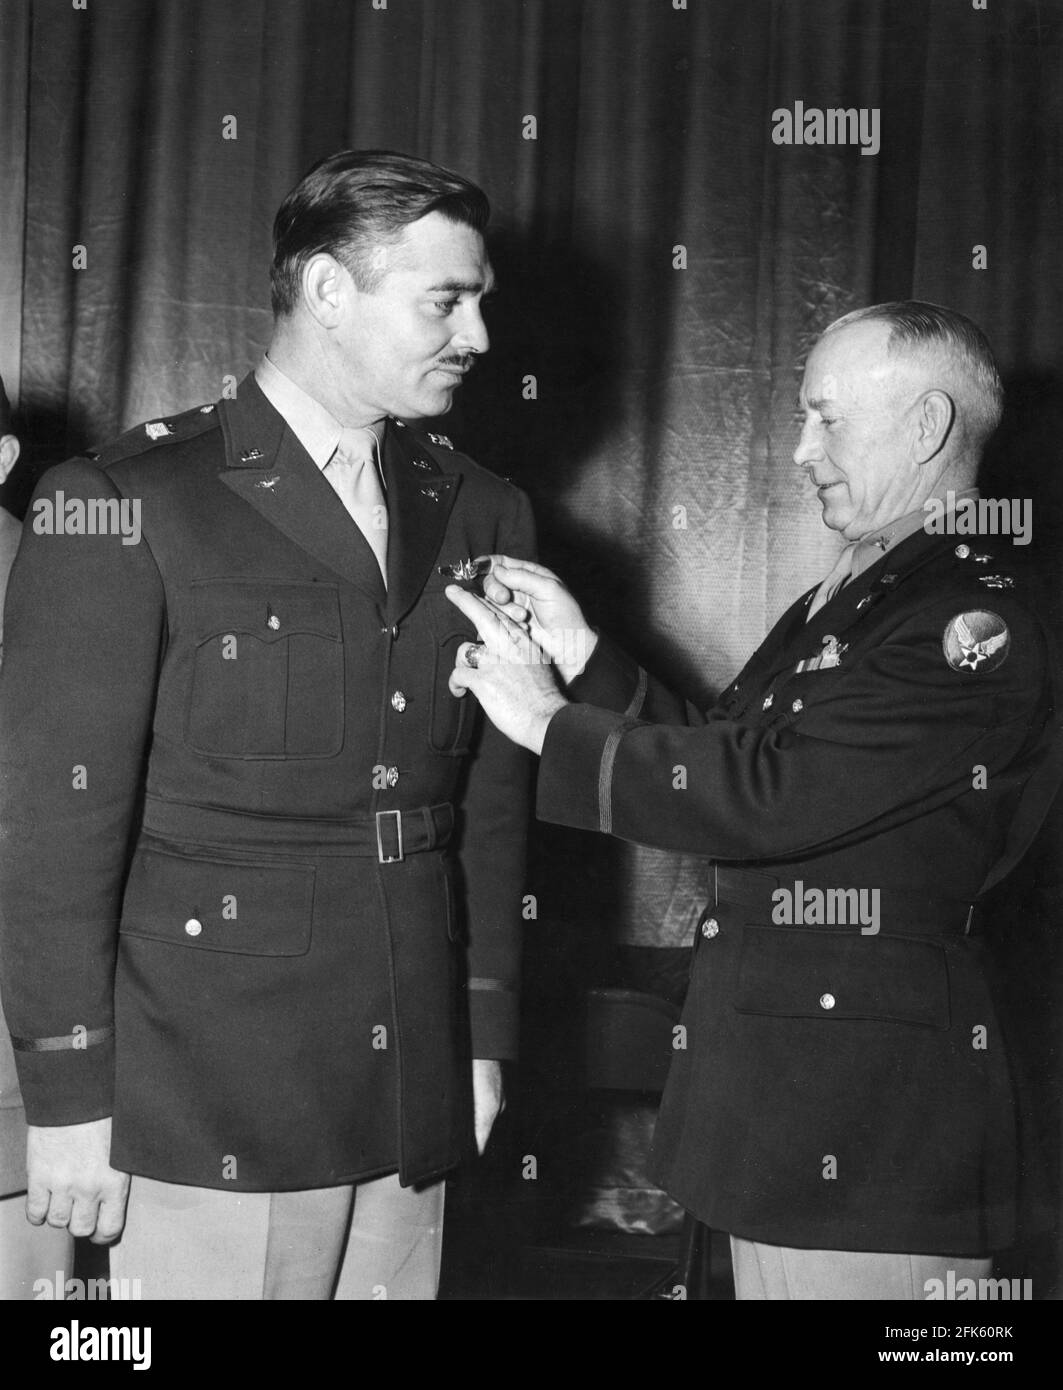 OBERSTLEUTNANT CLARK GABLE erhält die Gunners Silver Wings von Colonel W.A. MAXWELL, Kommandant der Army Air Forces Flexible Gunnery School im Tyndall Field, Panama City, Florida, bei der Abschlussfeier für die Klasse 43-1 am 6. Januar 1943 Stockfoto